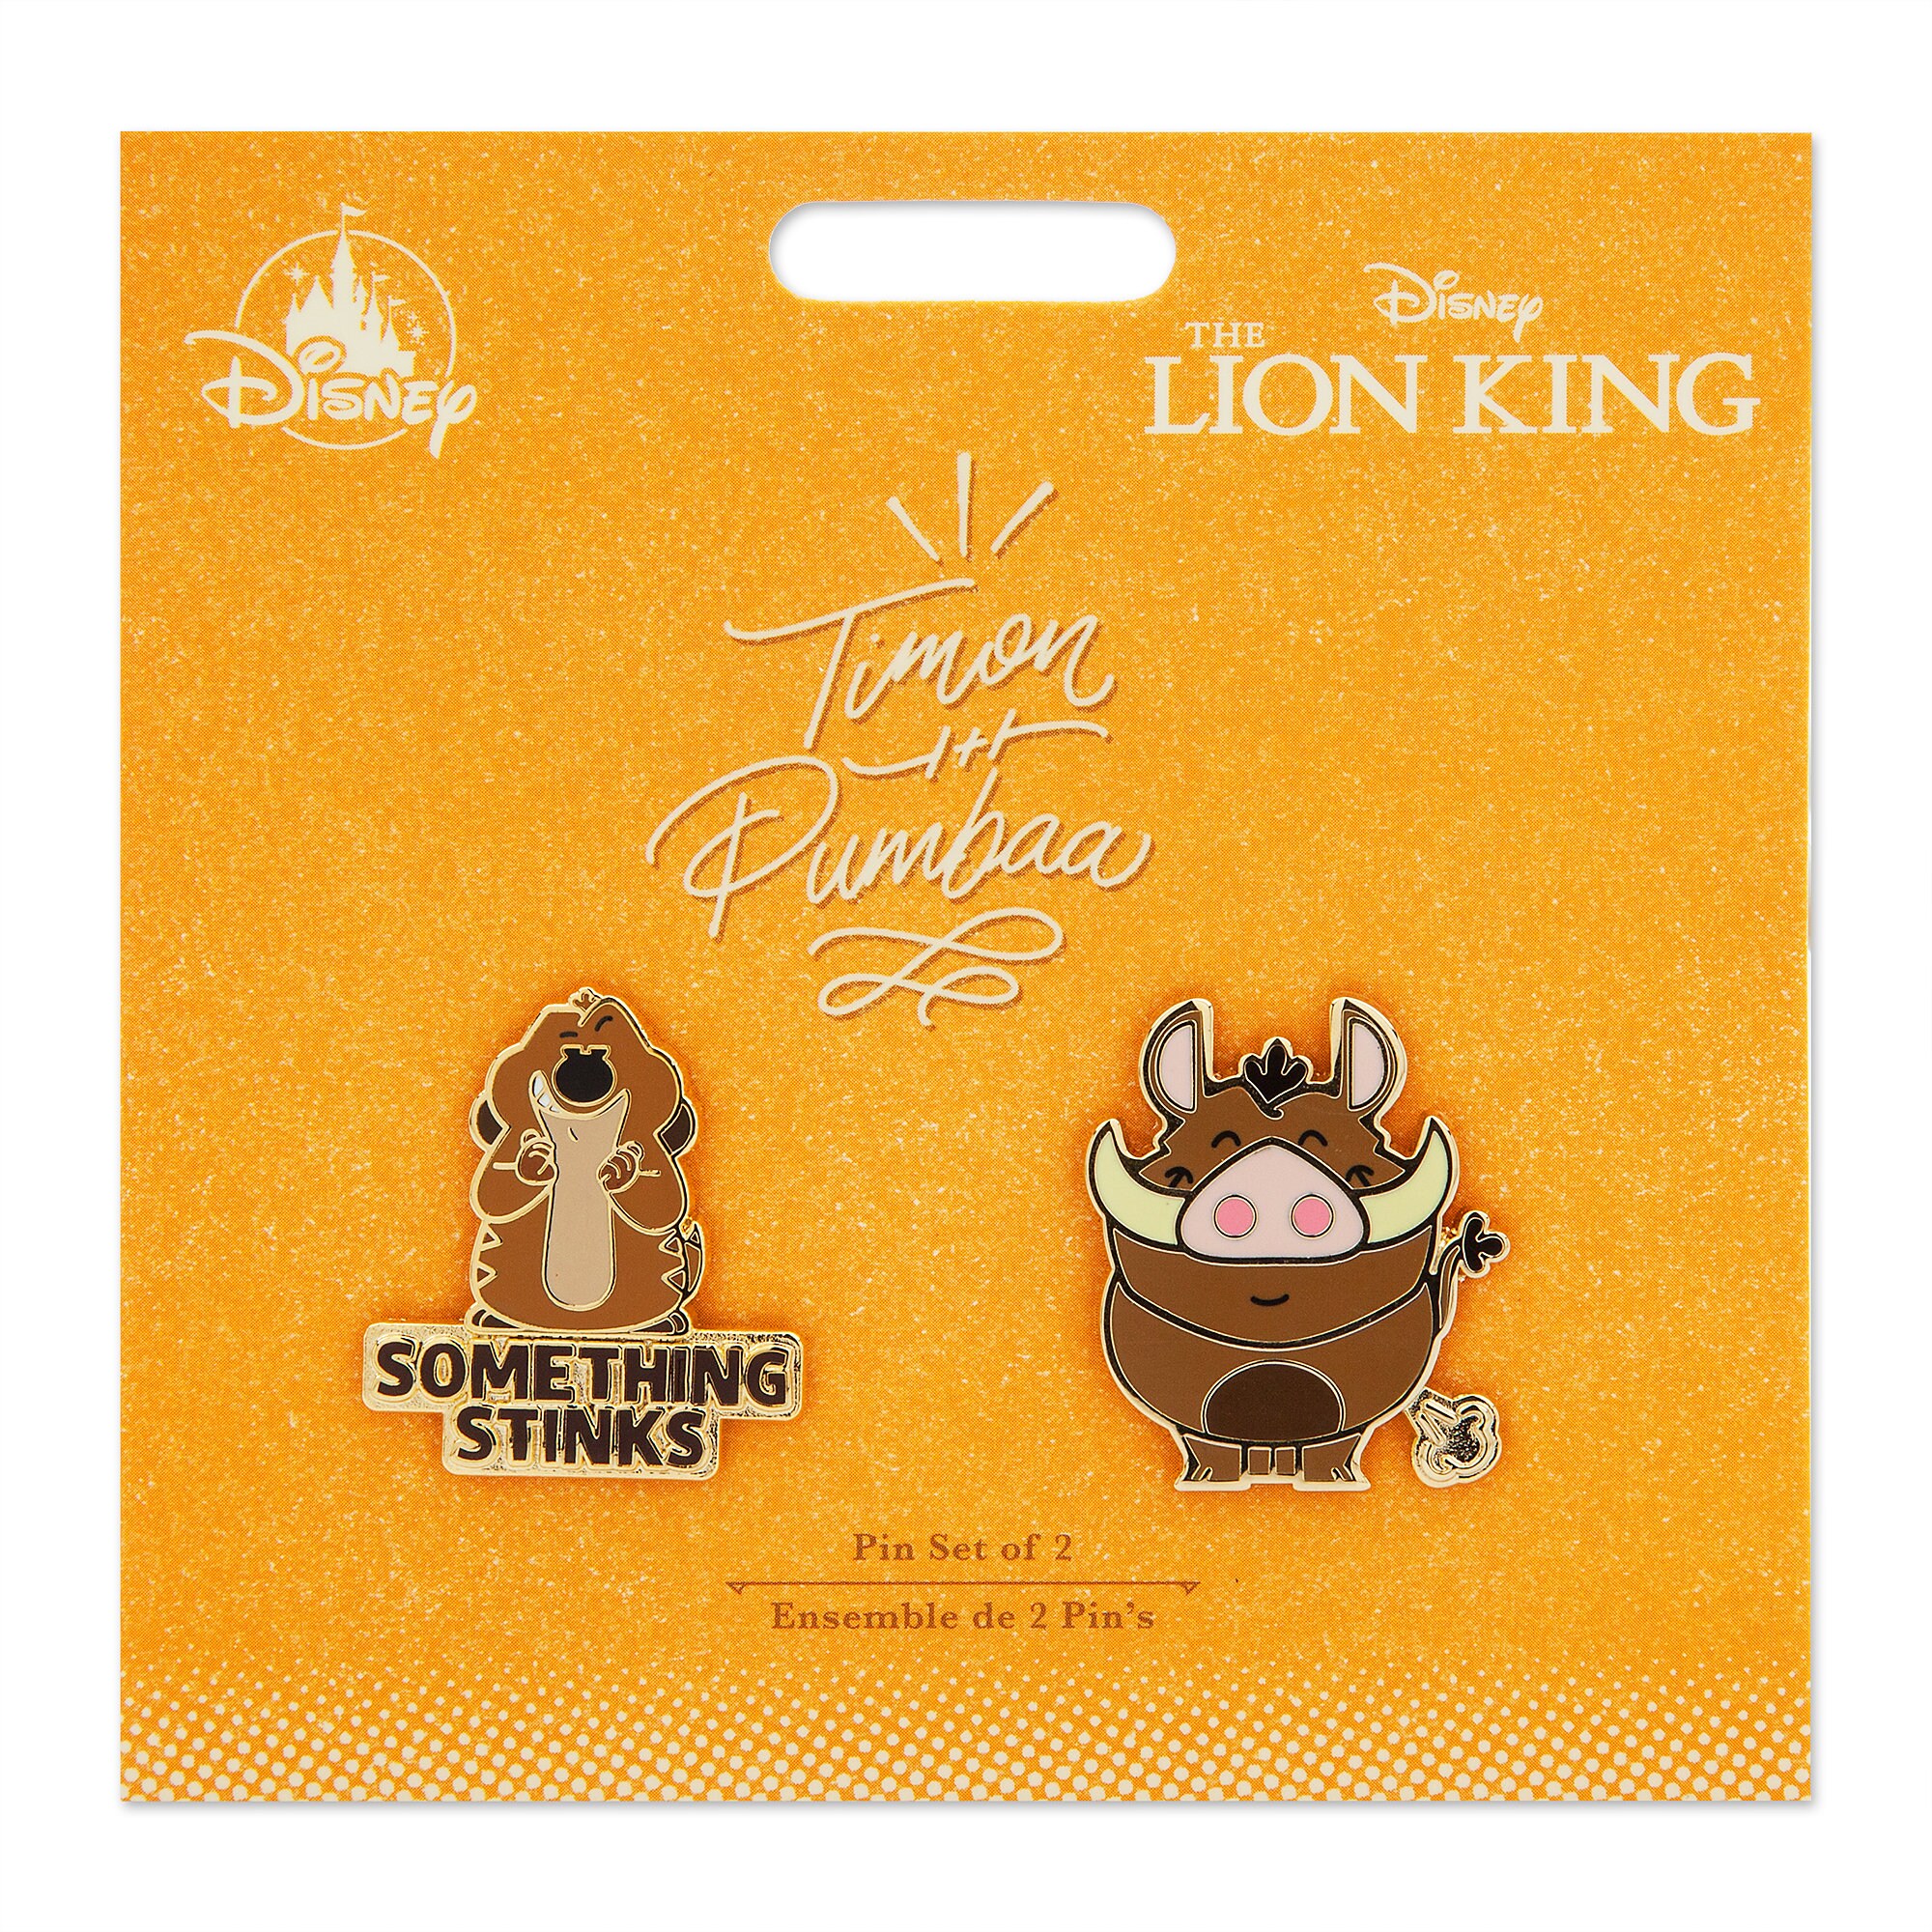 Timon and Pumbaa Pin Set - The Lion King